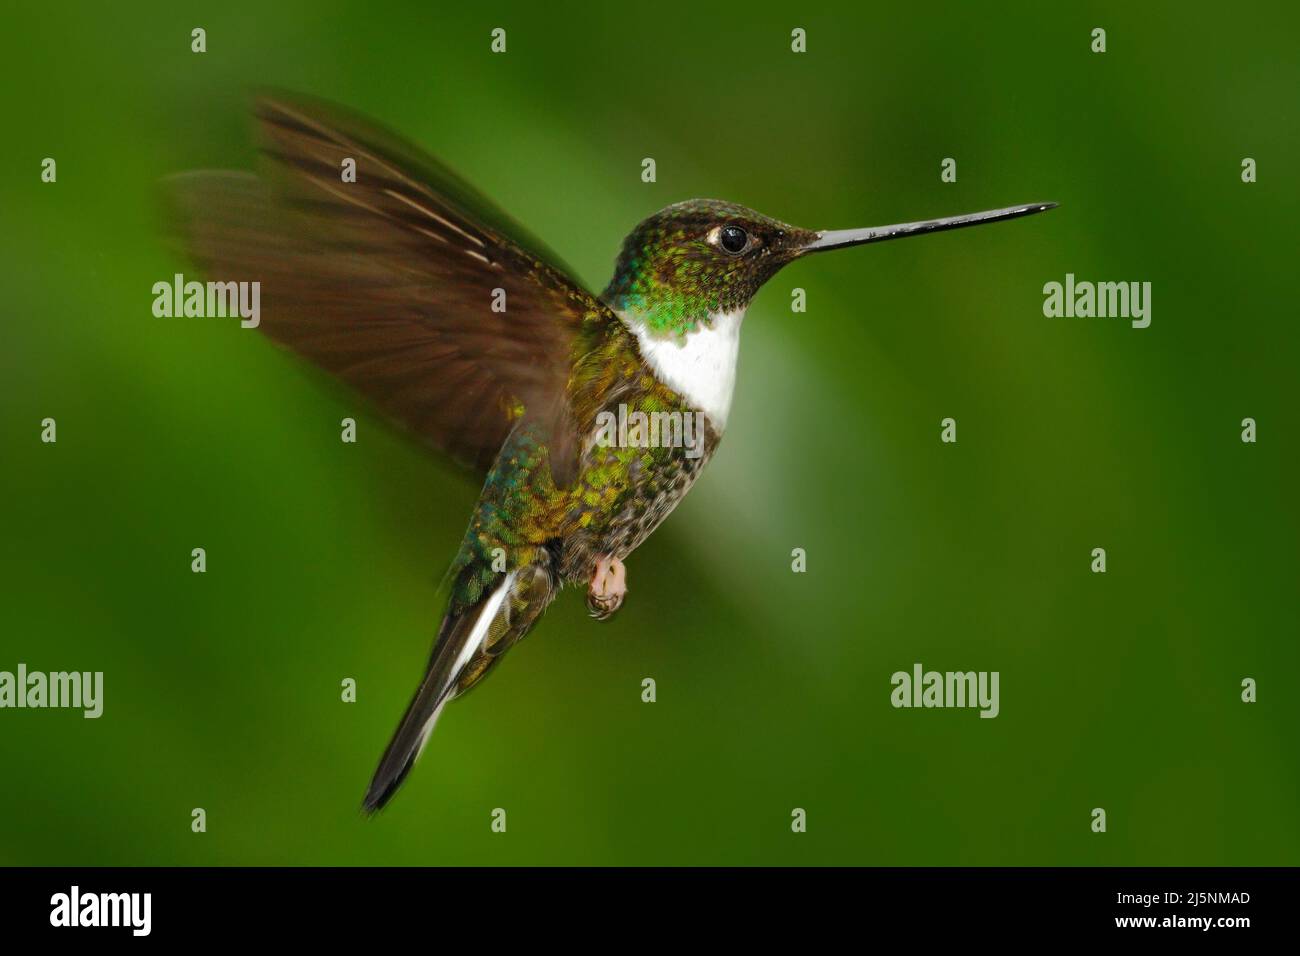 Flying hummingbird. Hummingbird in the green forest with open wings. Collared Inca, Coeligena torquata, hummingbird from Mindo forest, bird of Ecuador Stock Photo